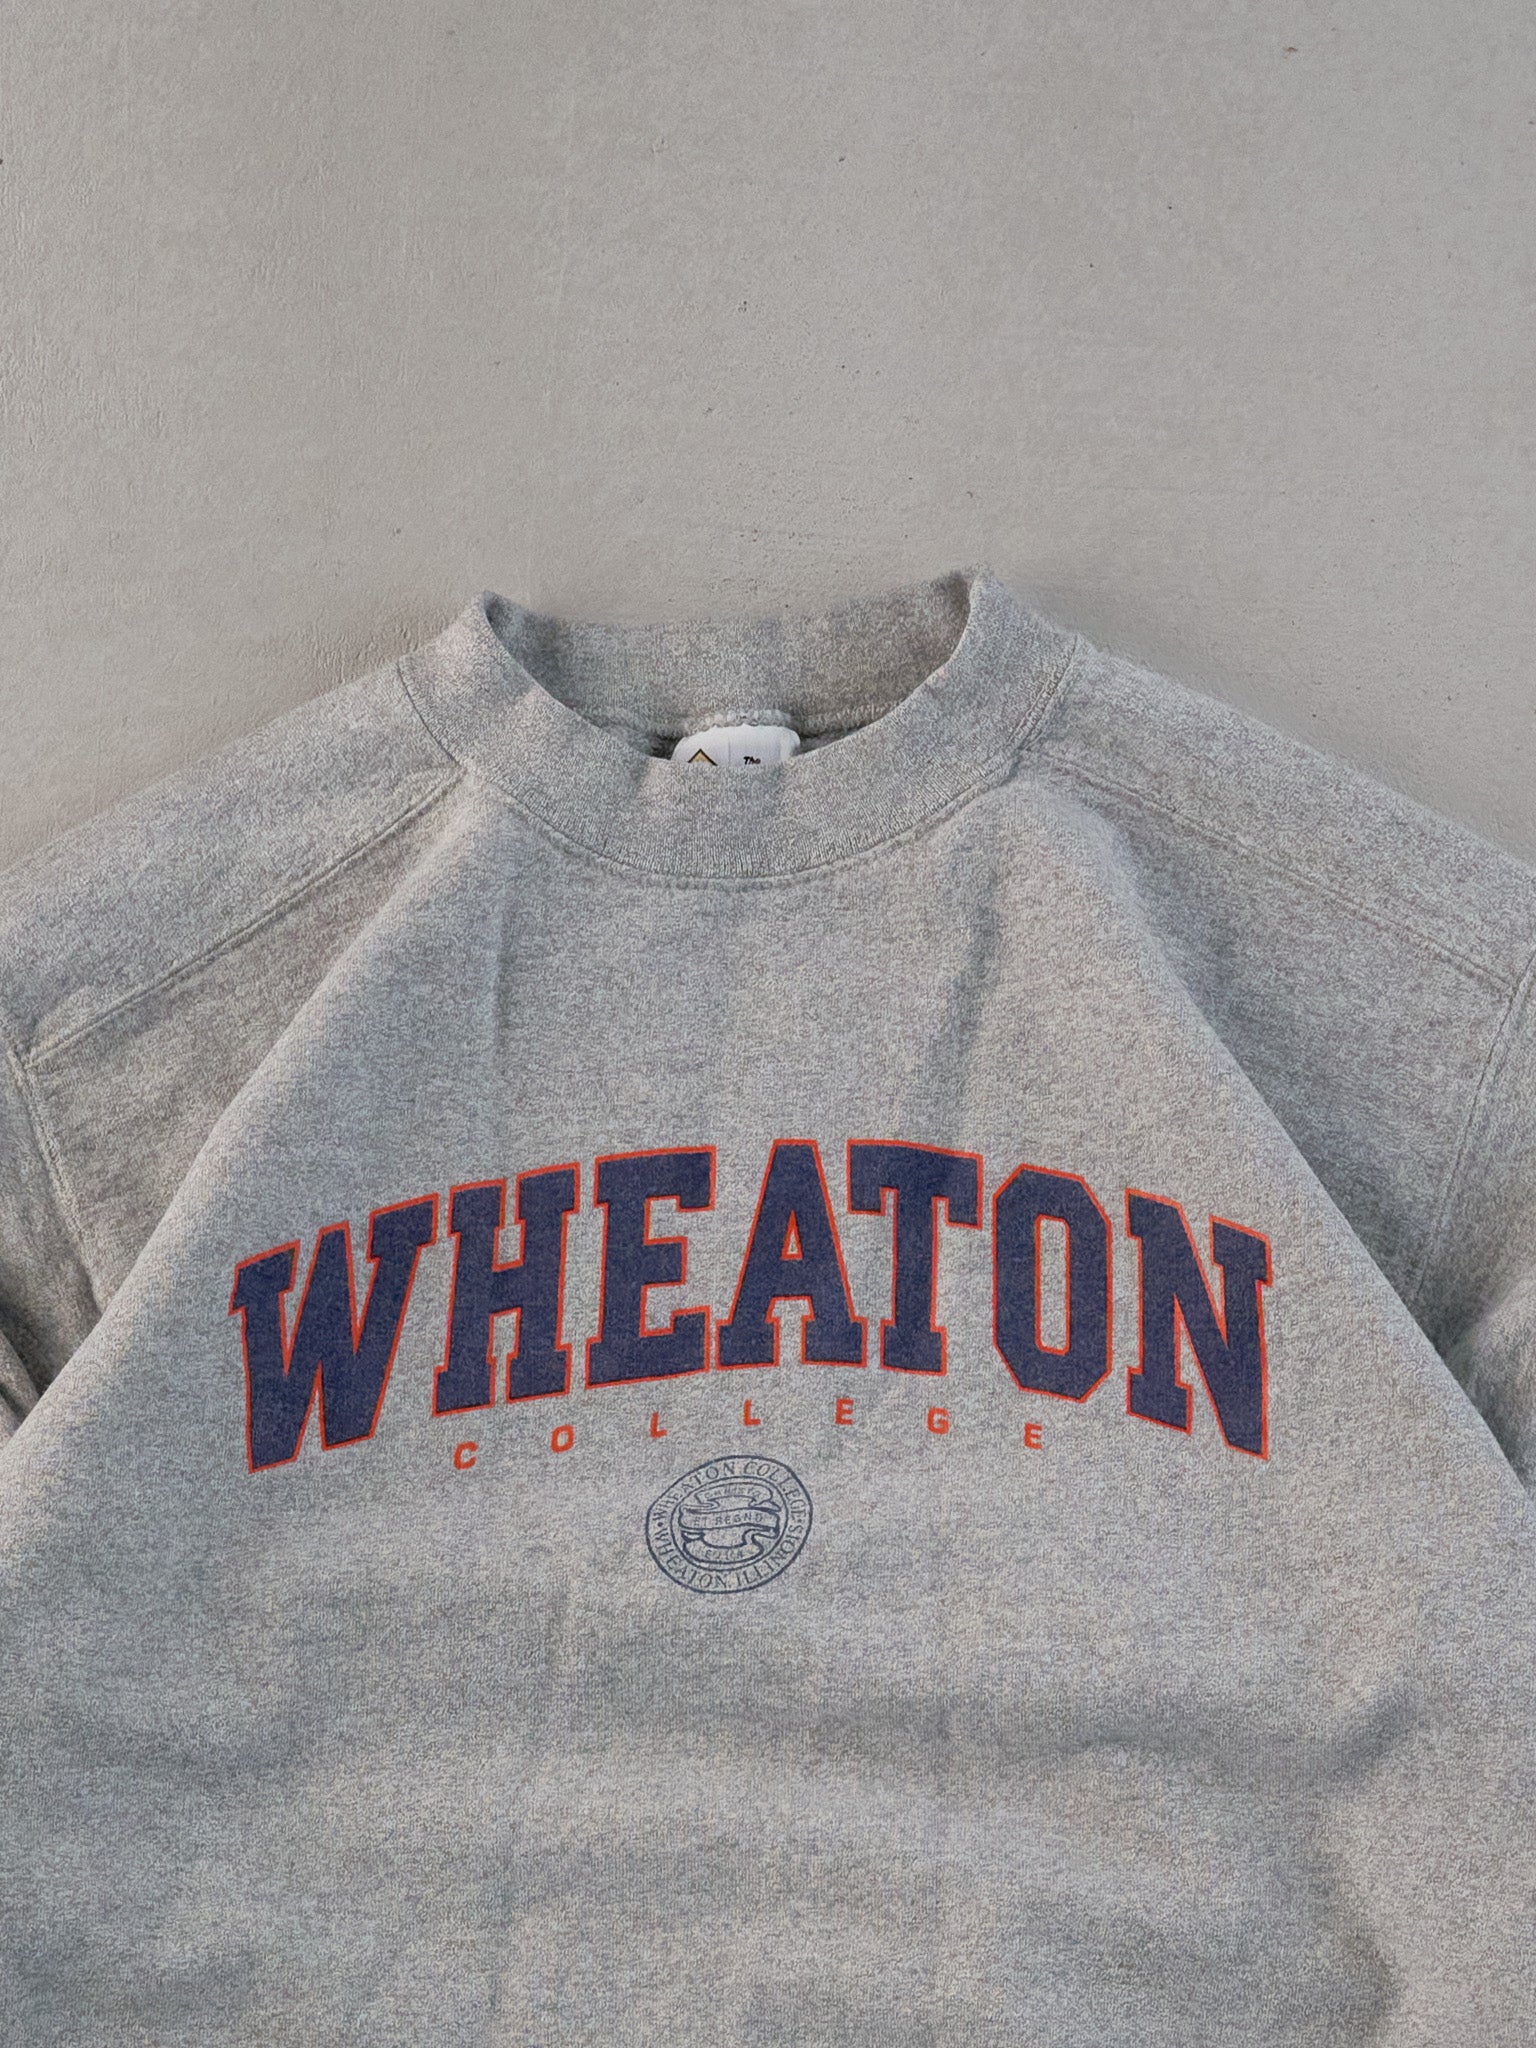 Vintage 90s Grey Wheaton College Crewneck (S/M)